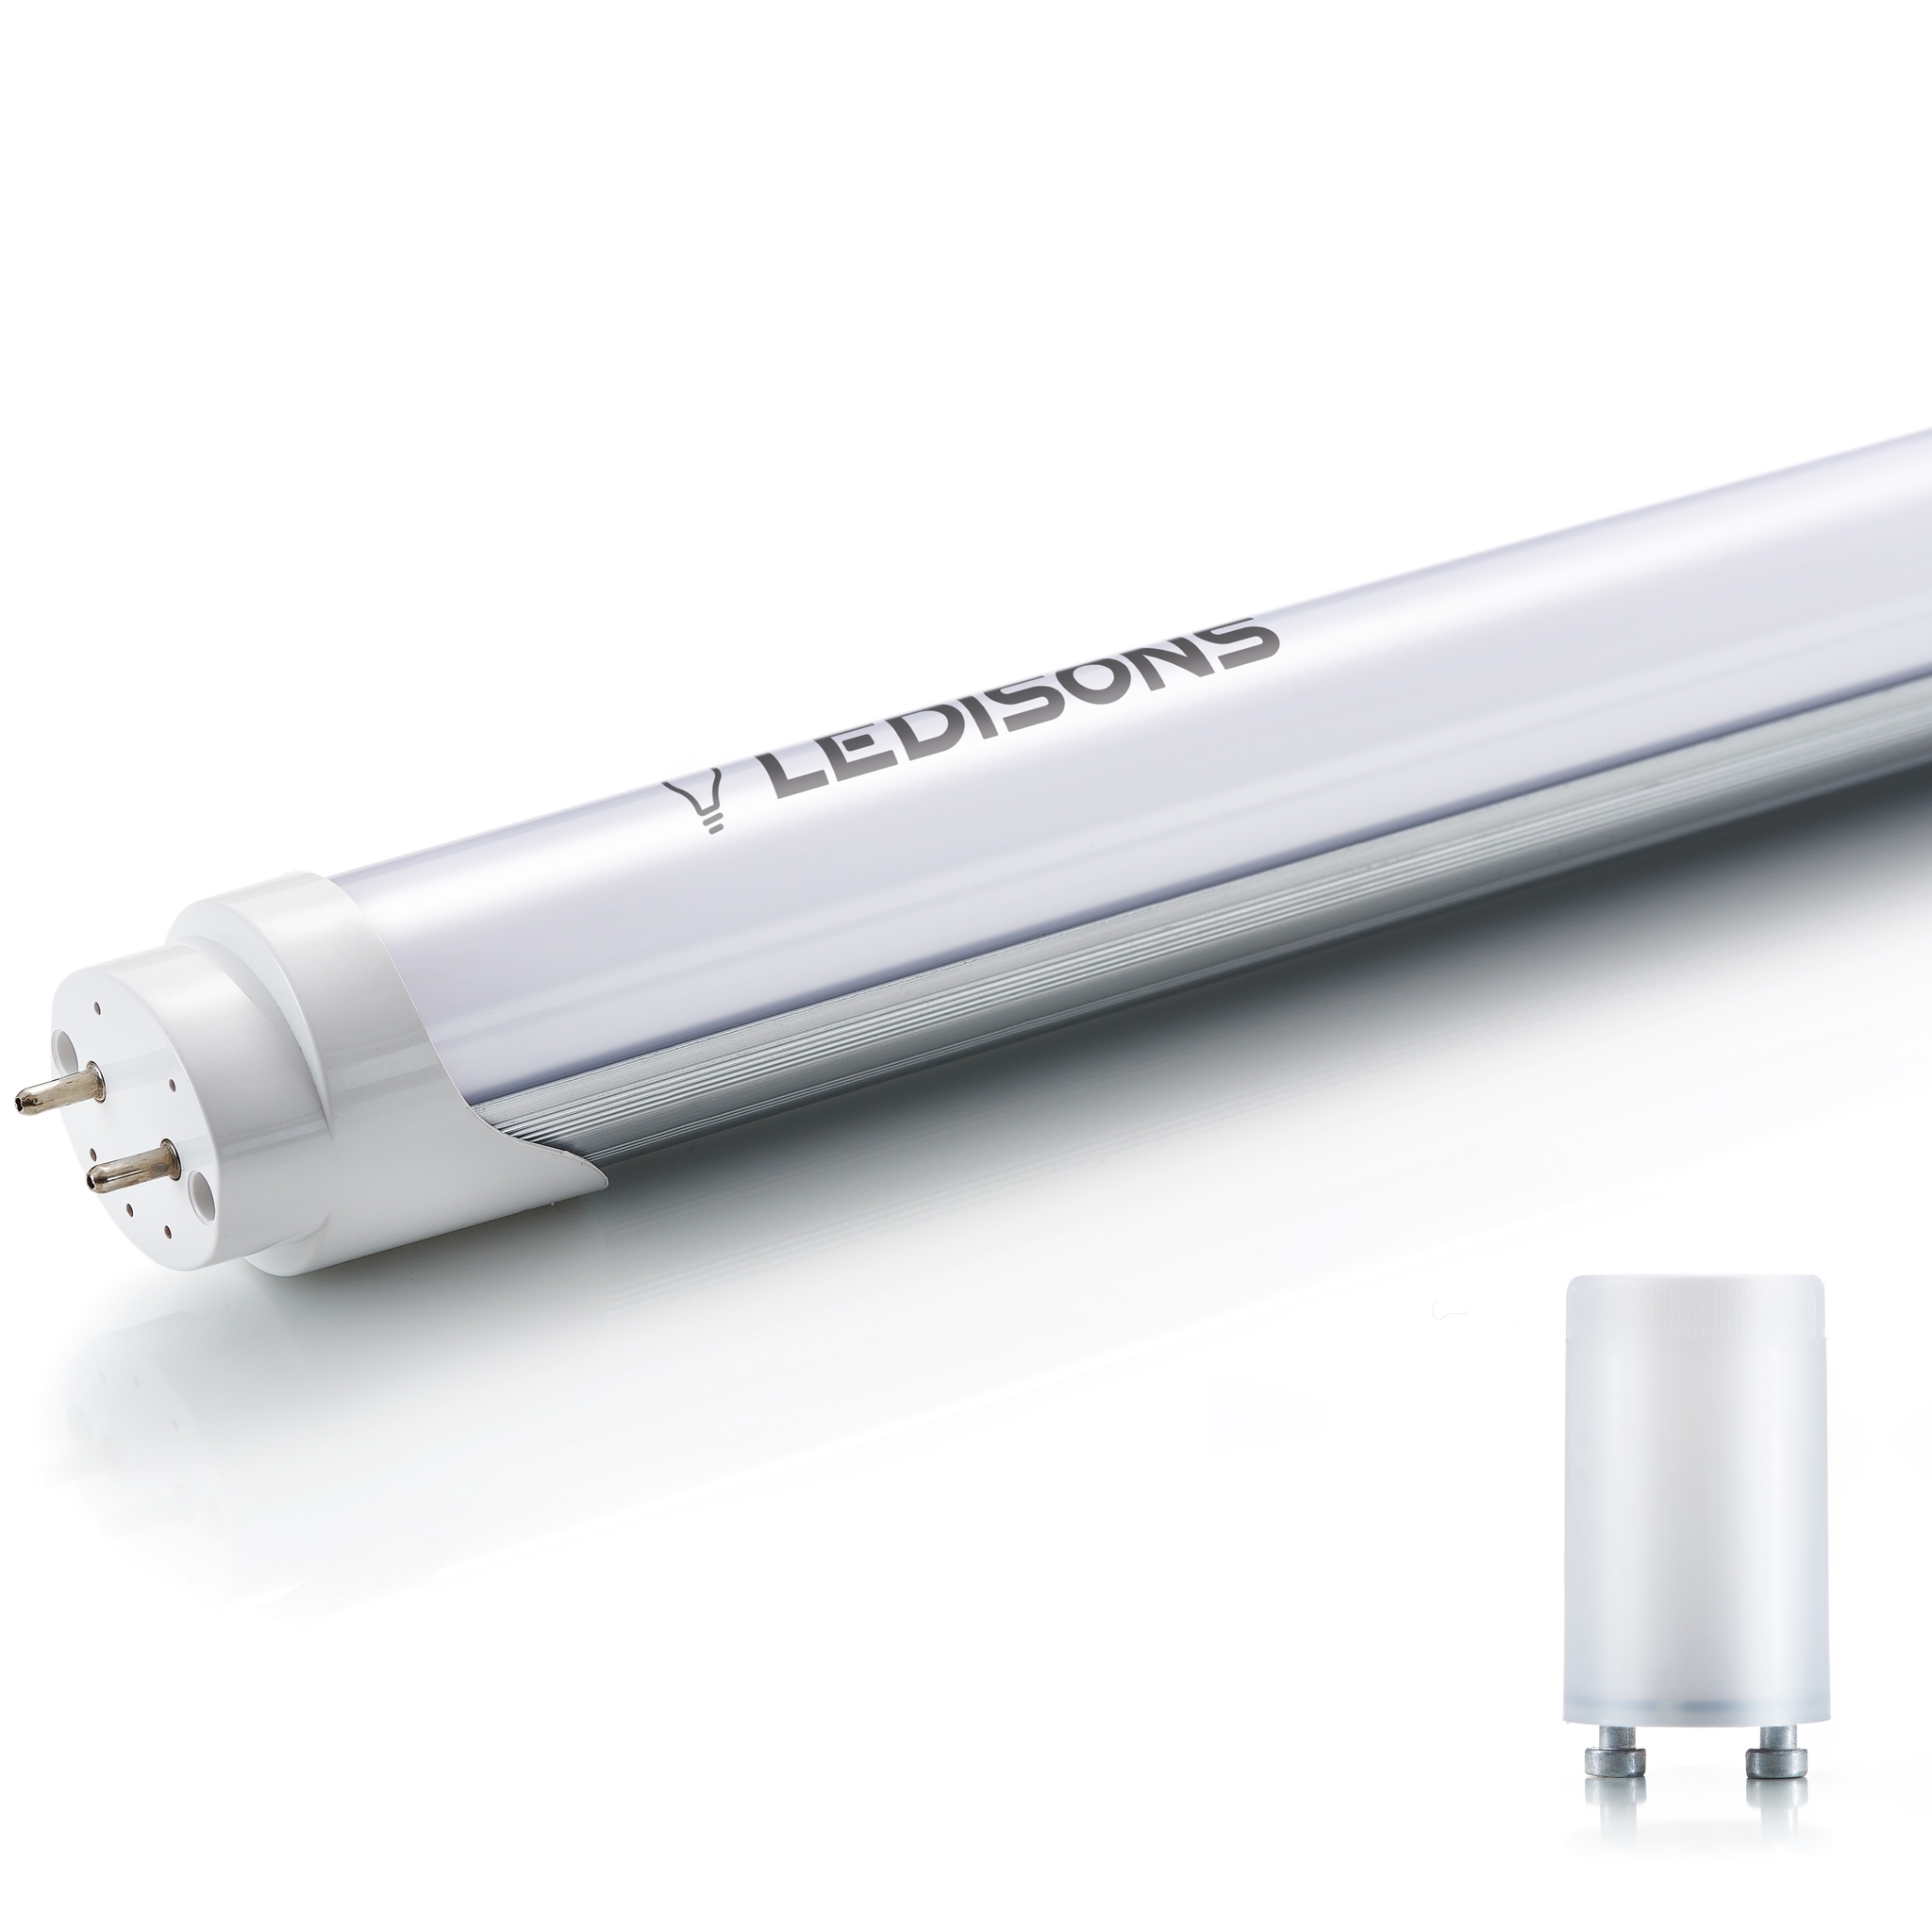 Zinloos Laat je zien Ritueel Bundel - 10x LED-tl-buis Tubus Pro 60 cm neutraal-wit | Led Wereld